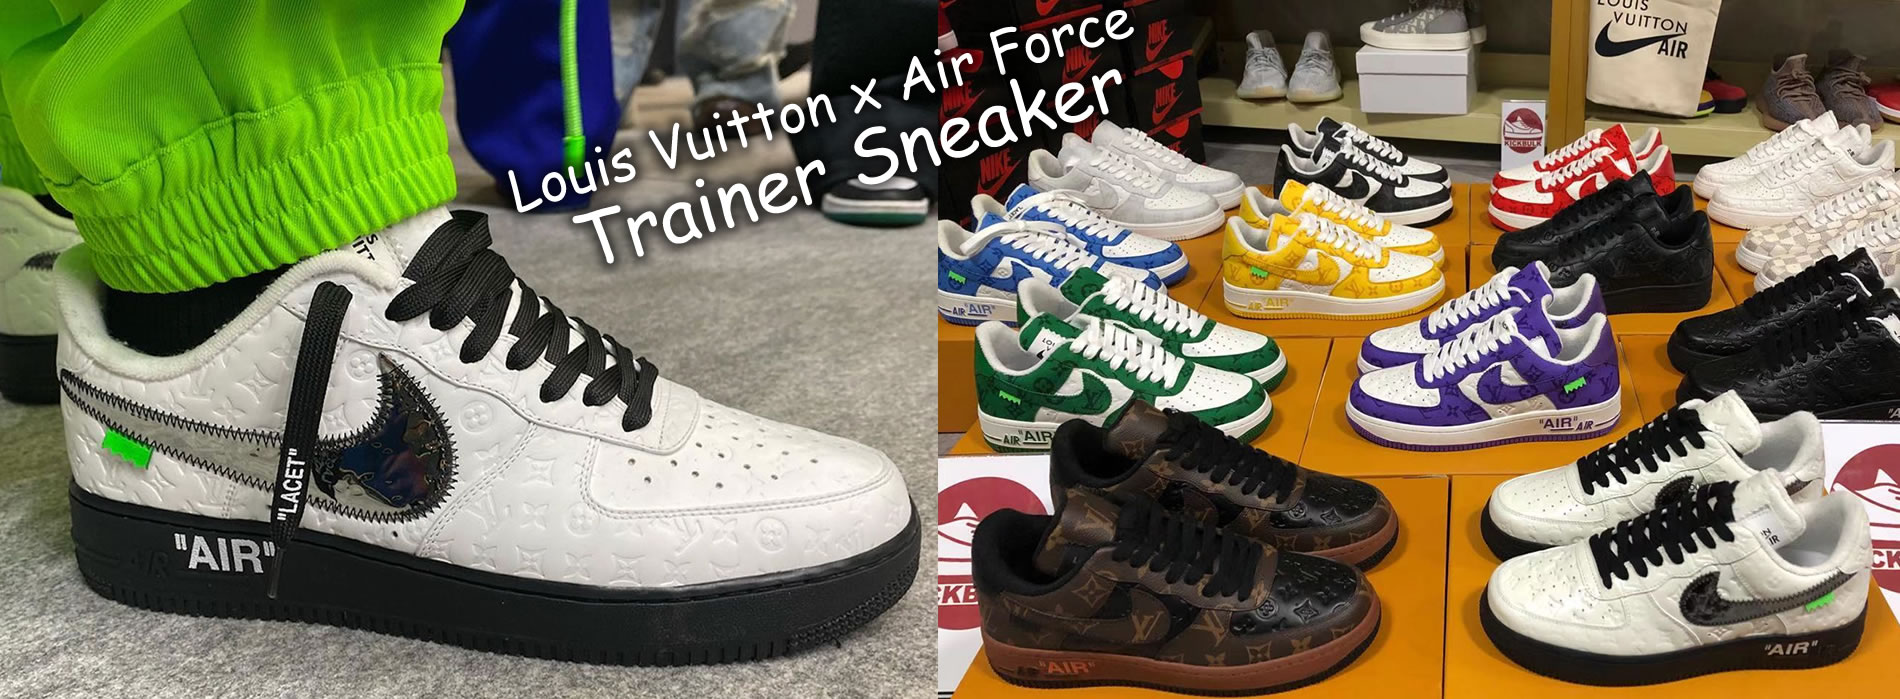 Louis Vuitton x Air Force 1 Trainer LEE Sneaker